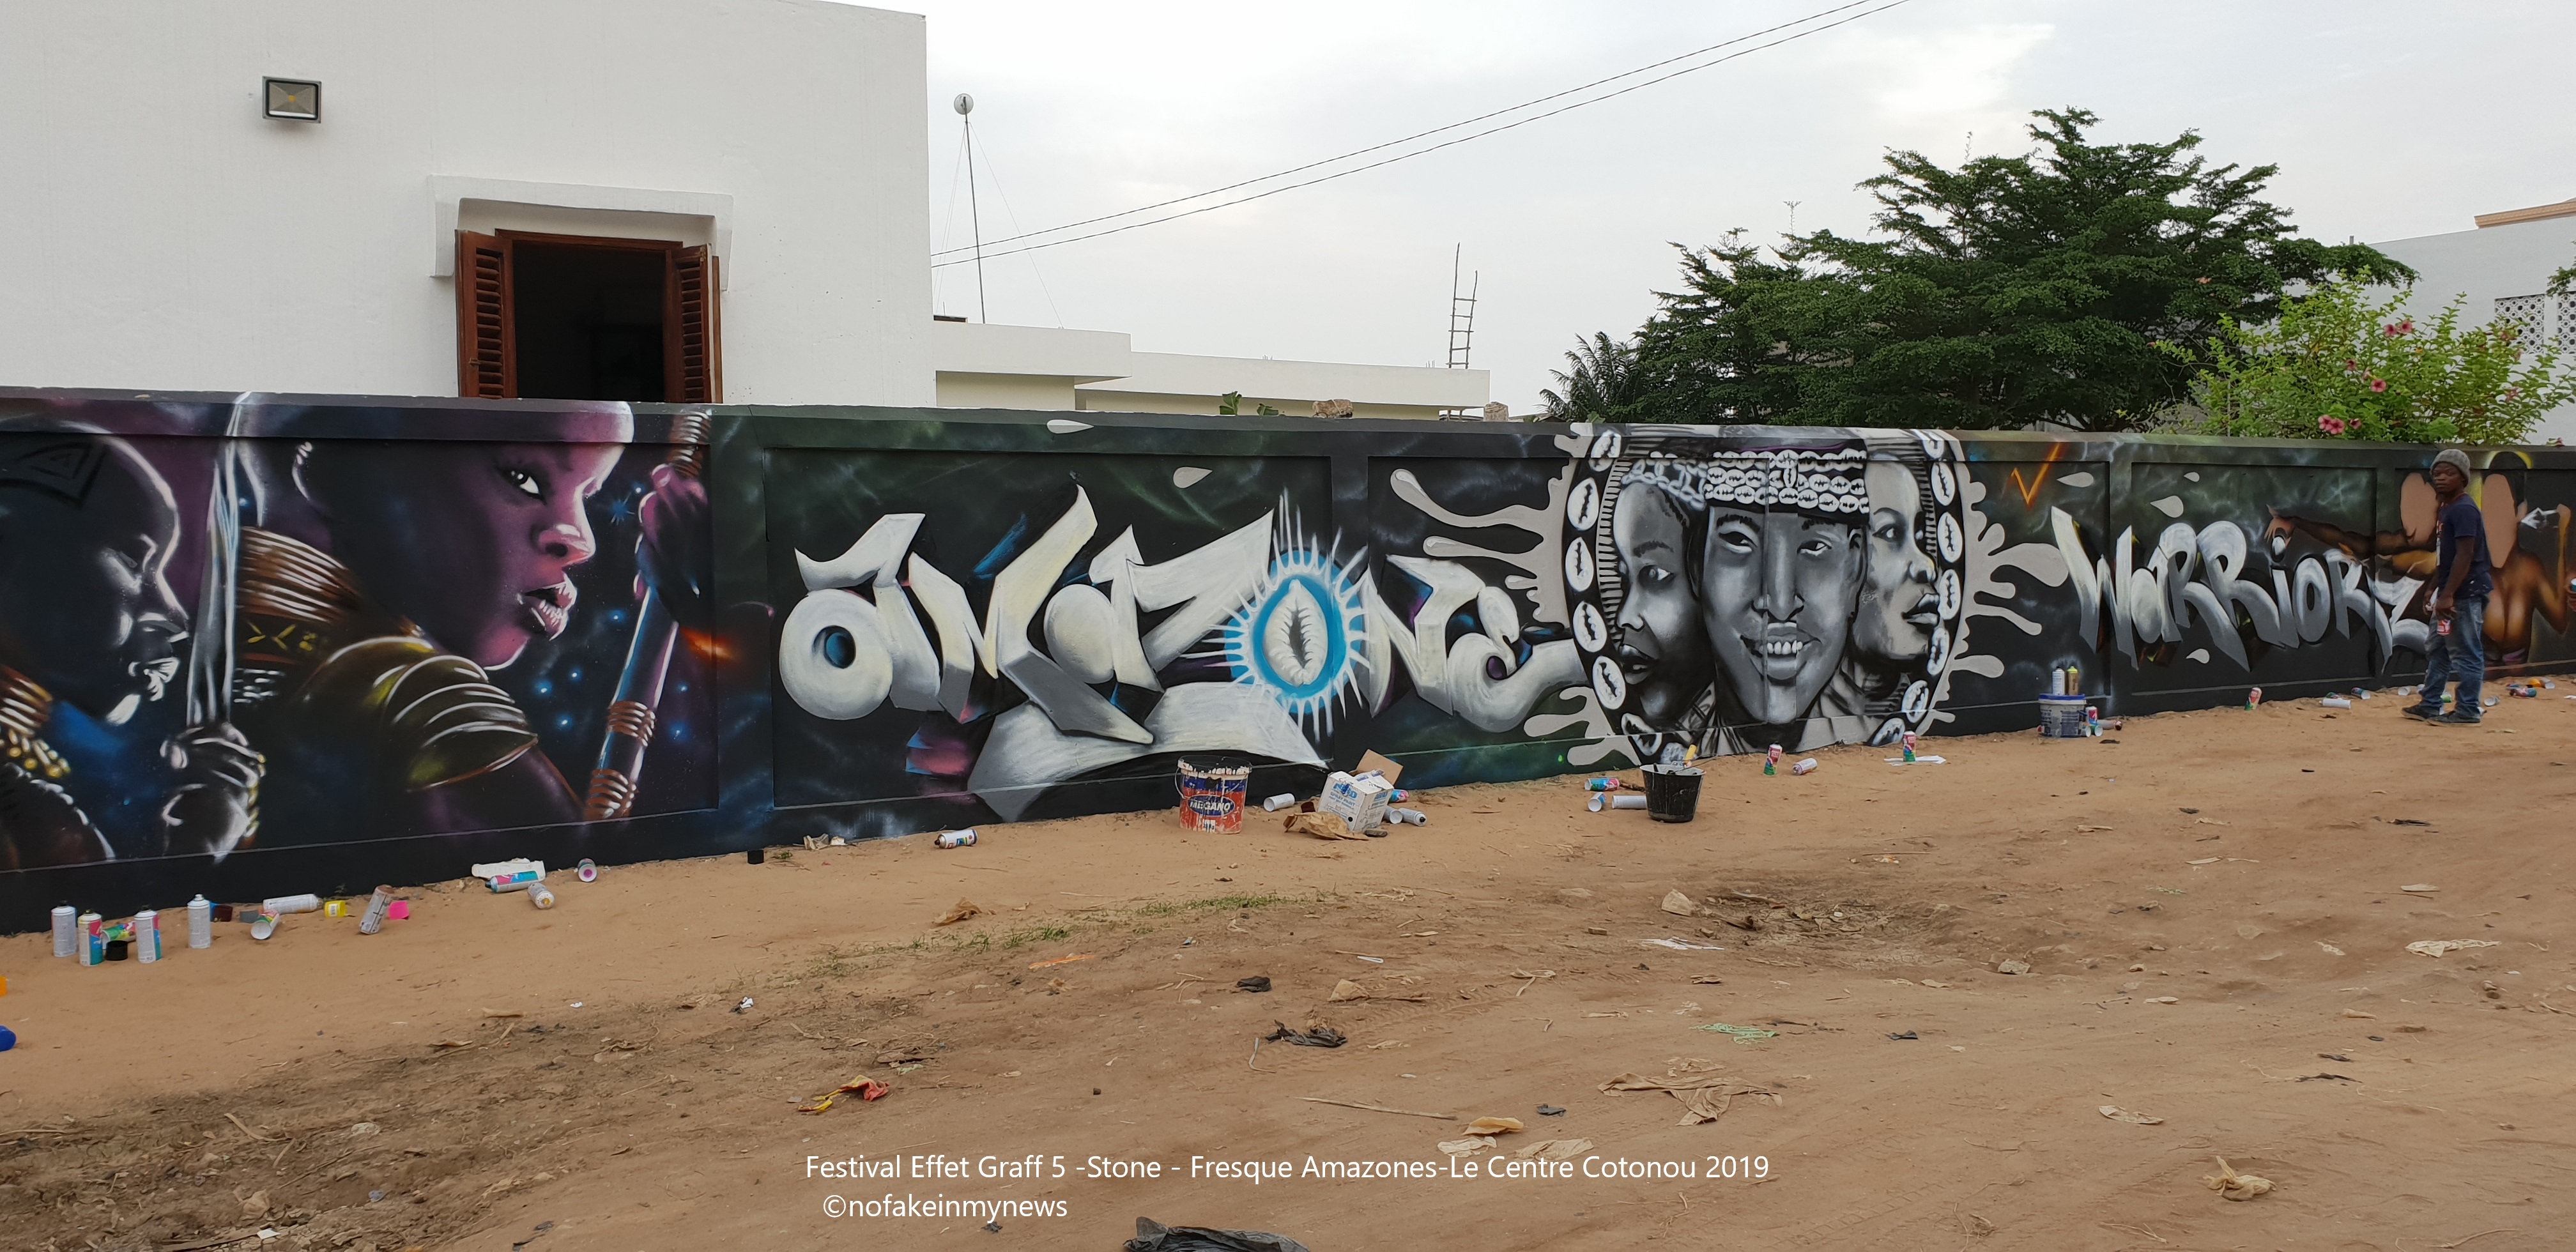 Festival Effet Graff 5 -Stone -Le Centre Cotonou 2019 - ©nofakeinmynews